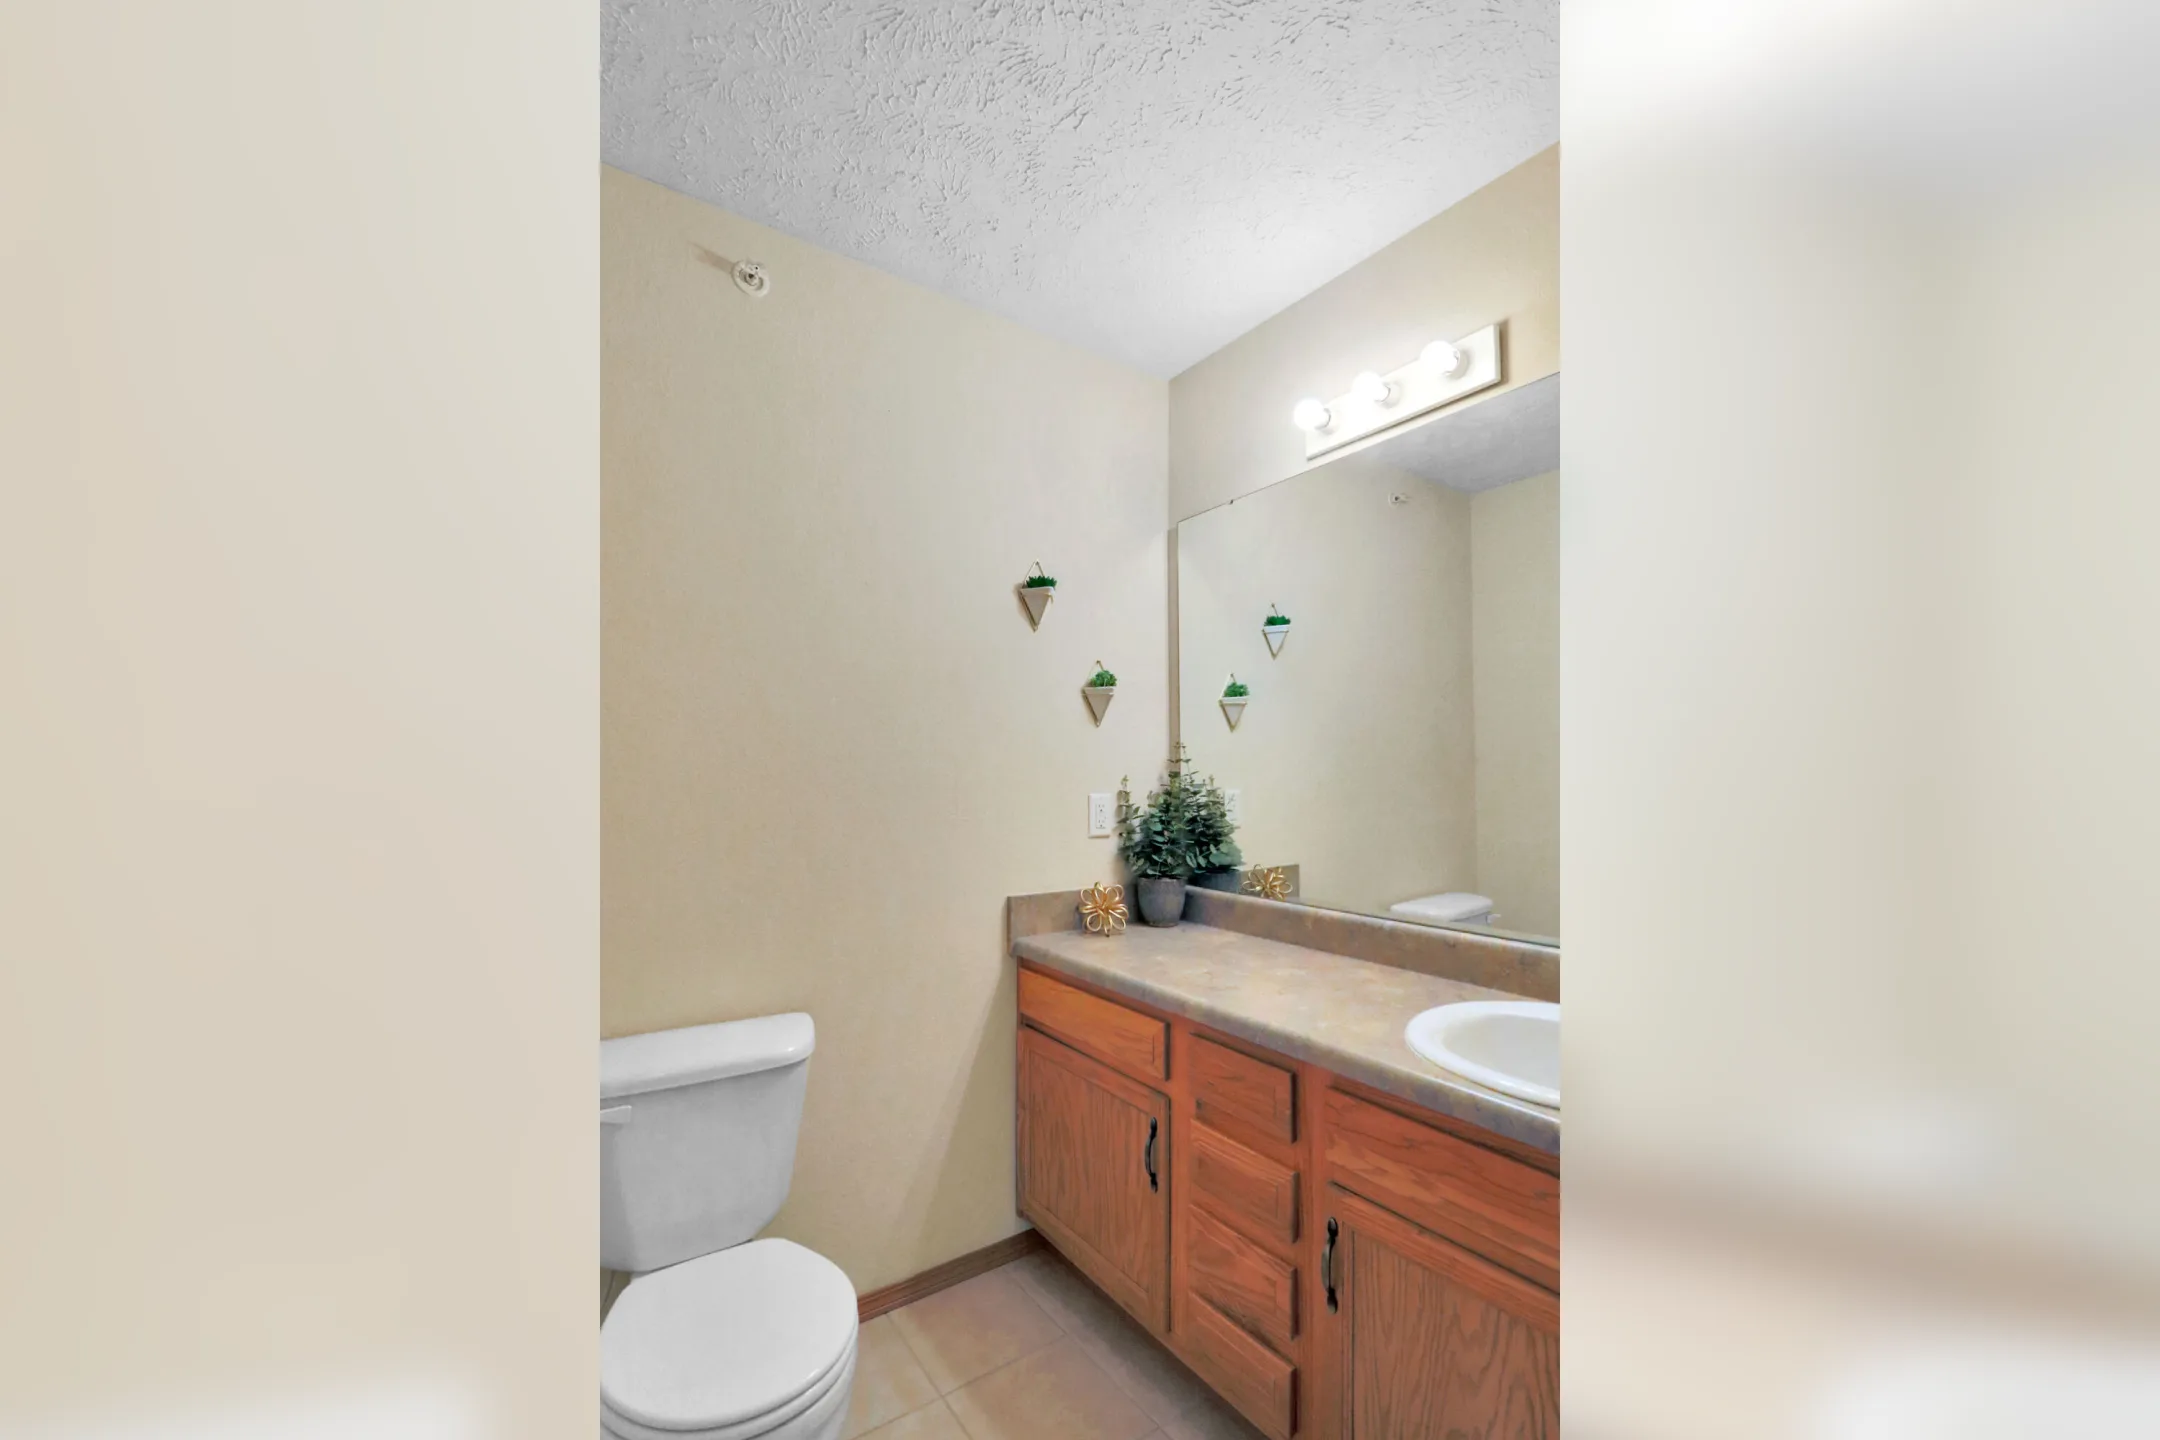 Bathroom - Old Stone Apartments - Republic, MO